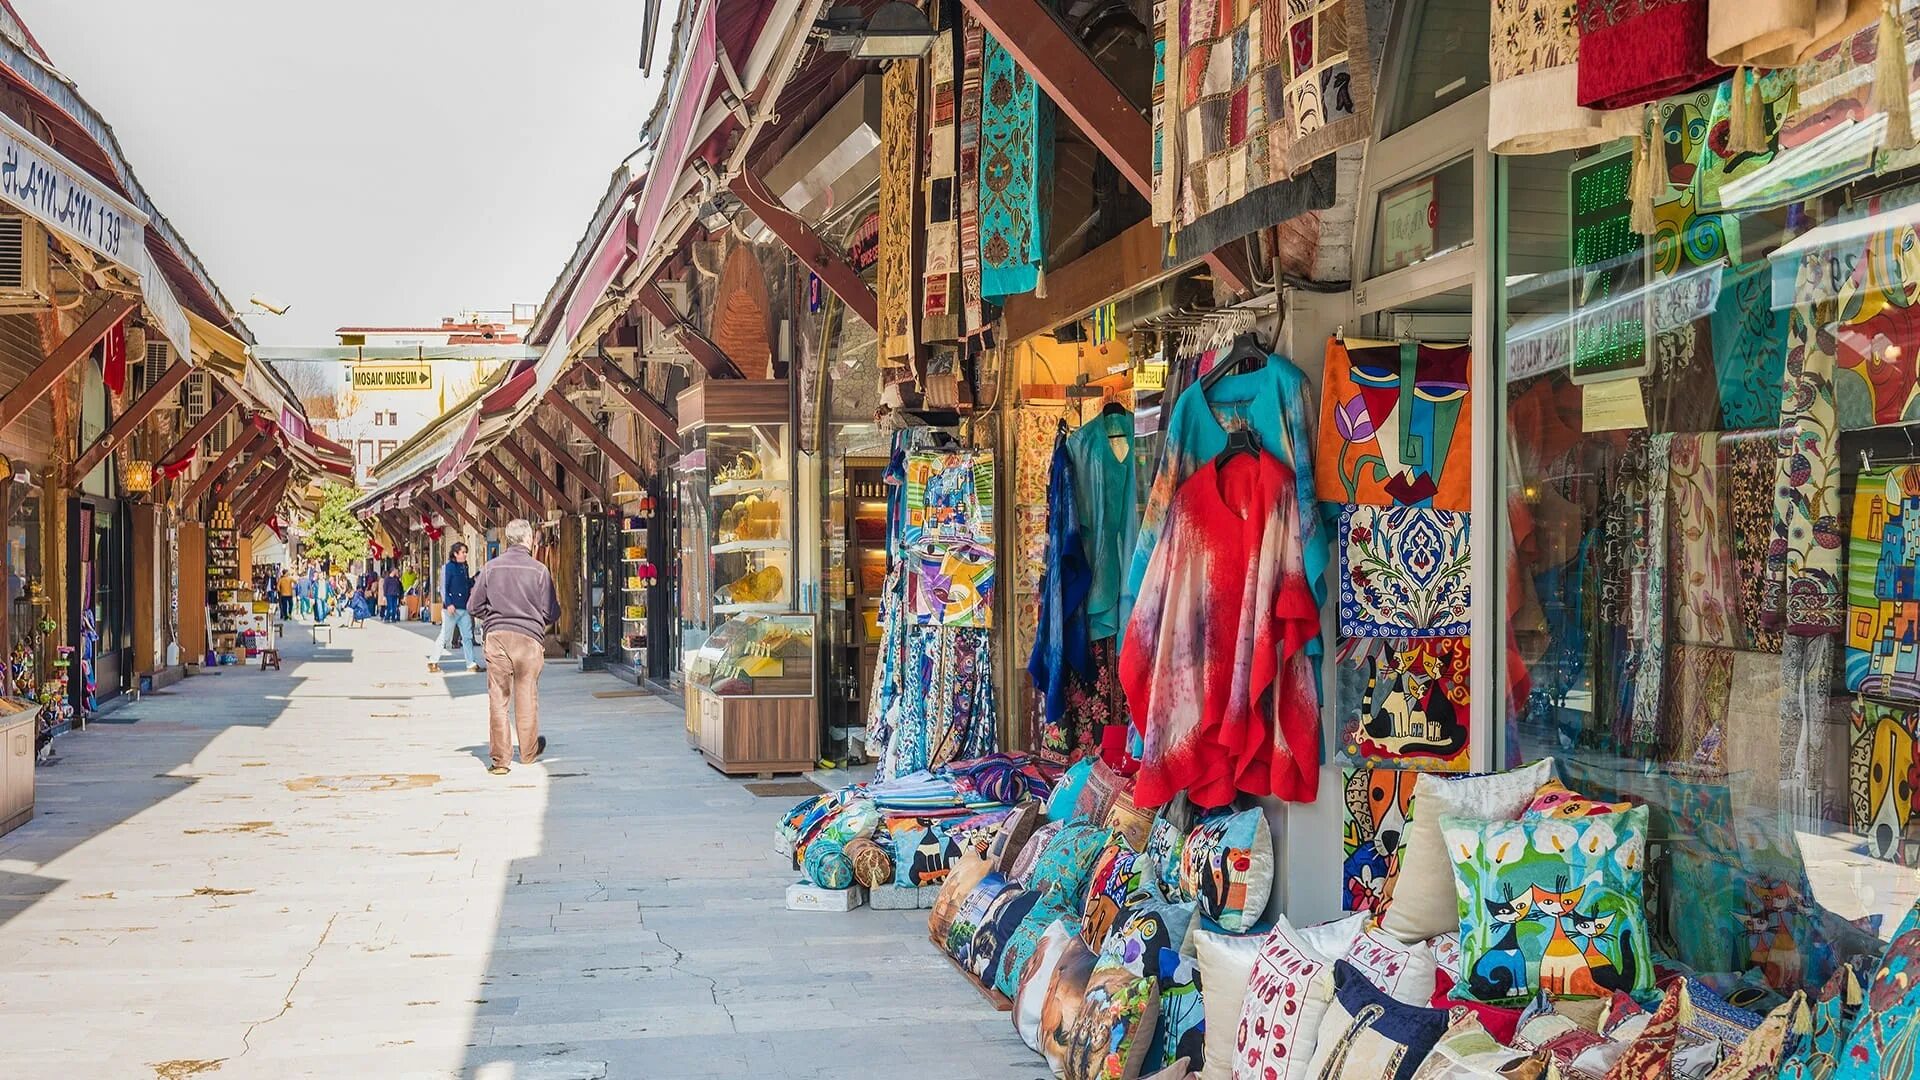 Стамбул где купить. Араста базар в Стамбуле. Рынок Османбей в Стамбуле. Рынок Араста в Стамбуле. Гранд базар Стамбул.